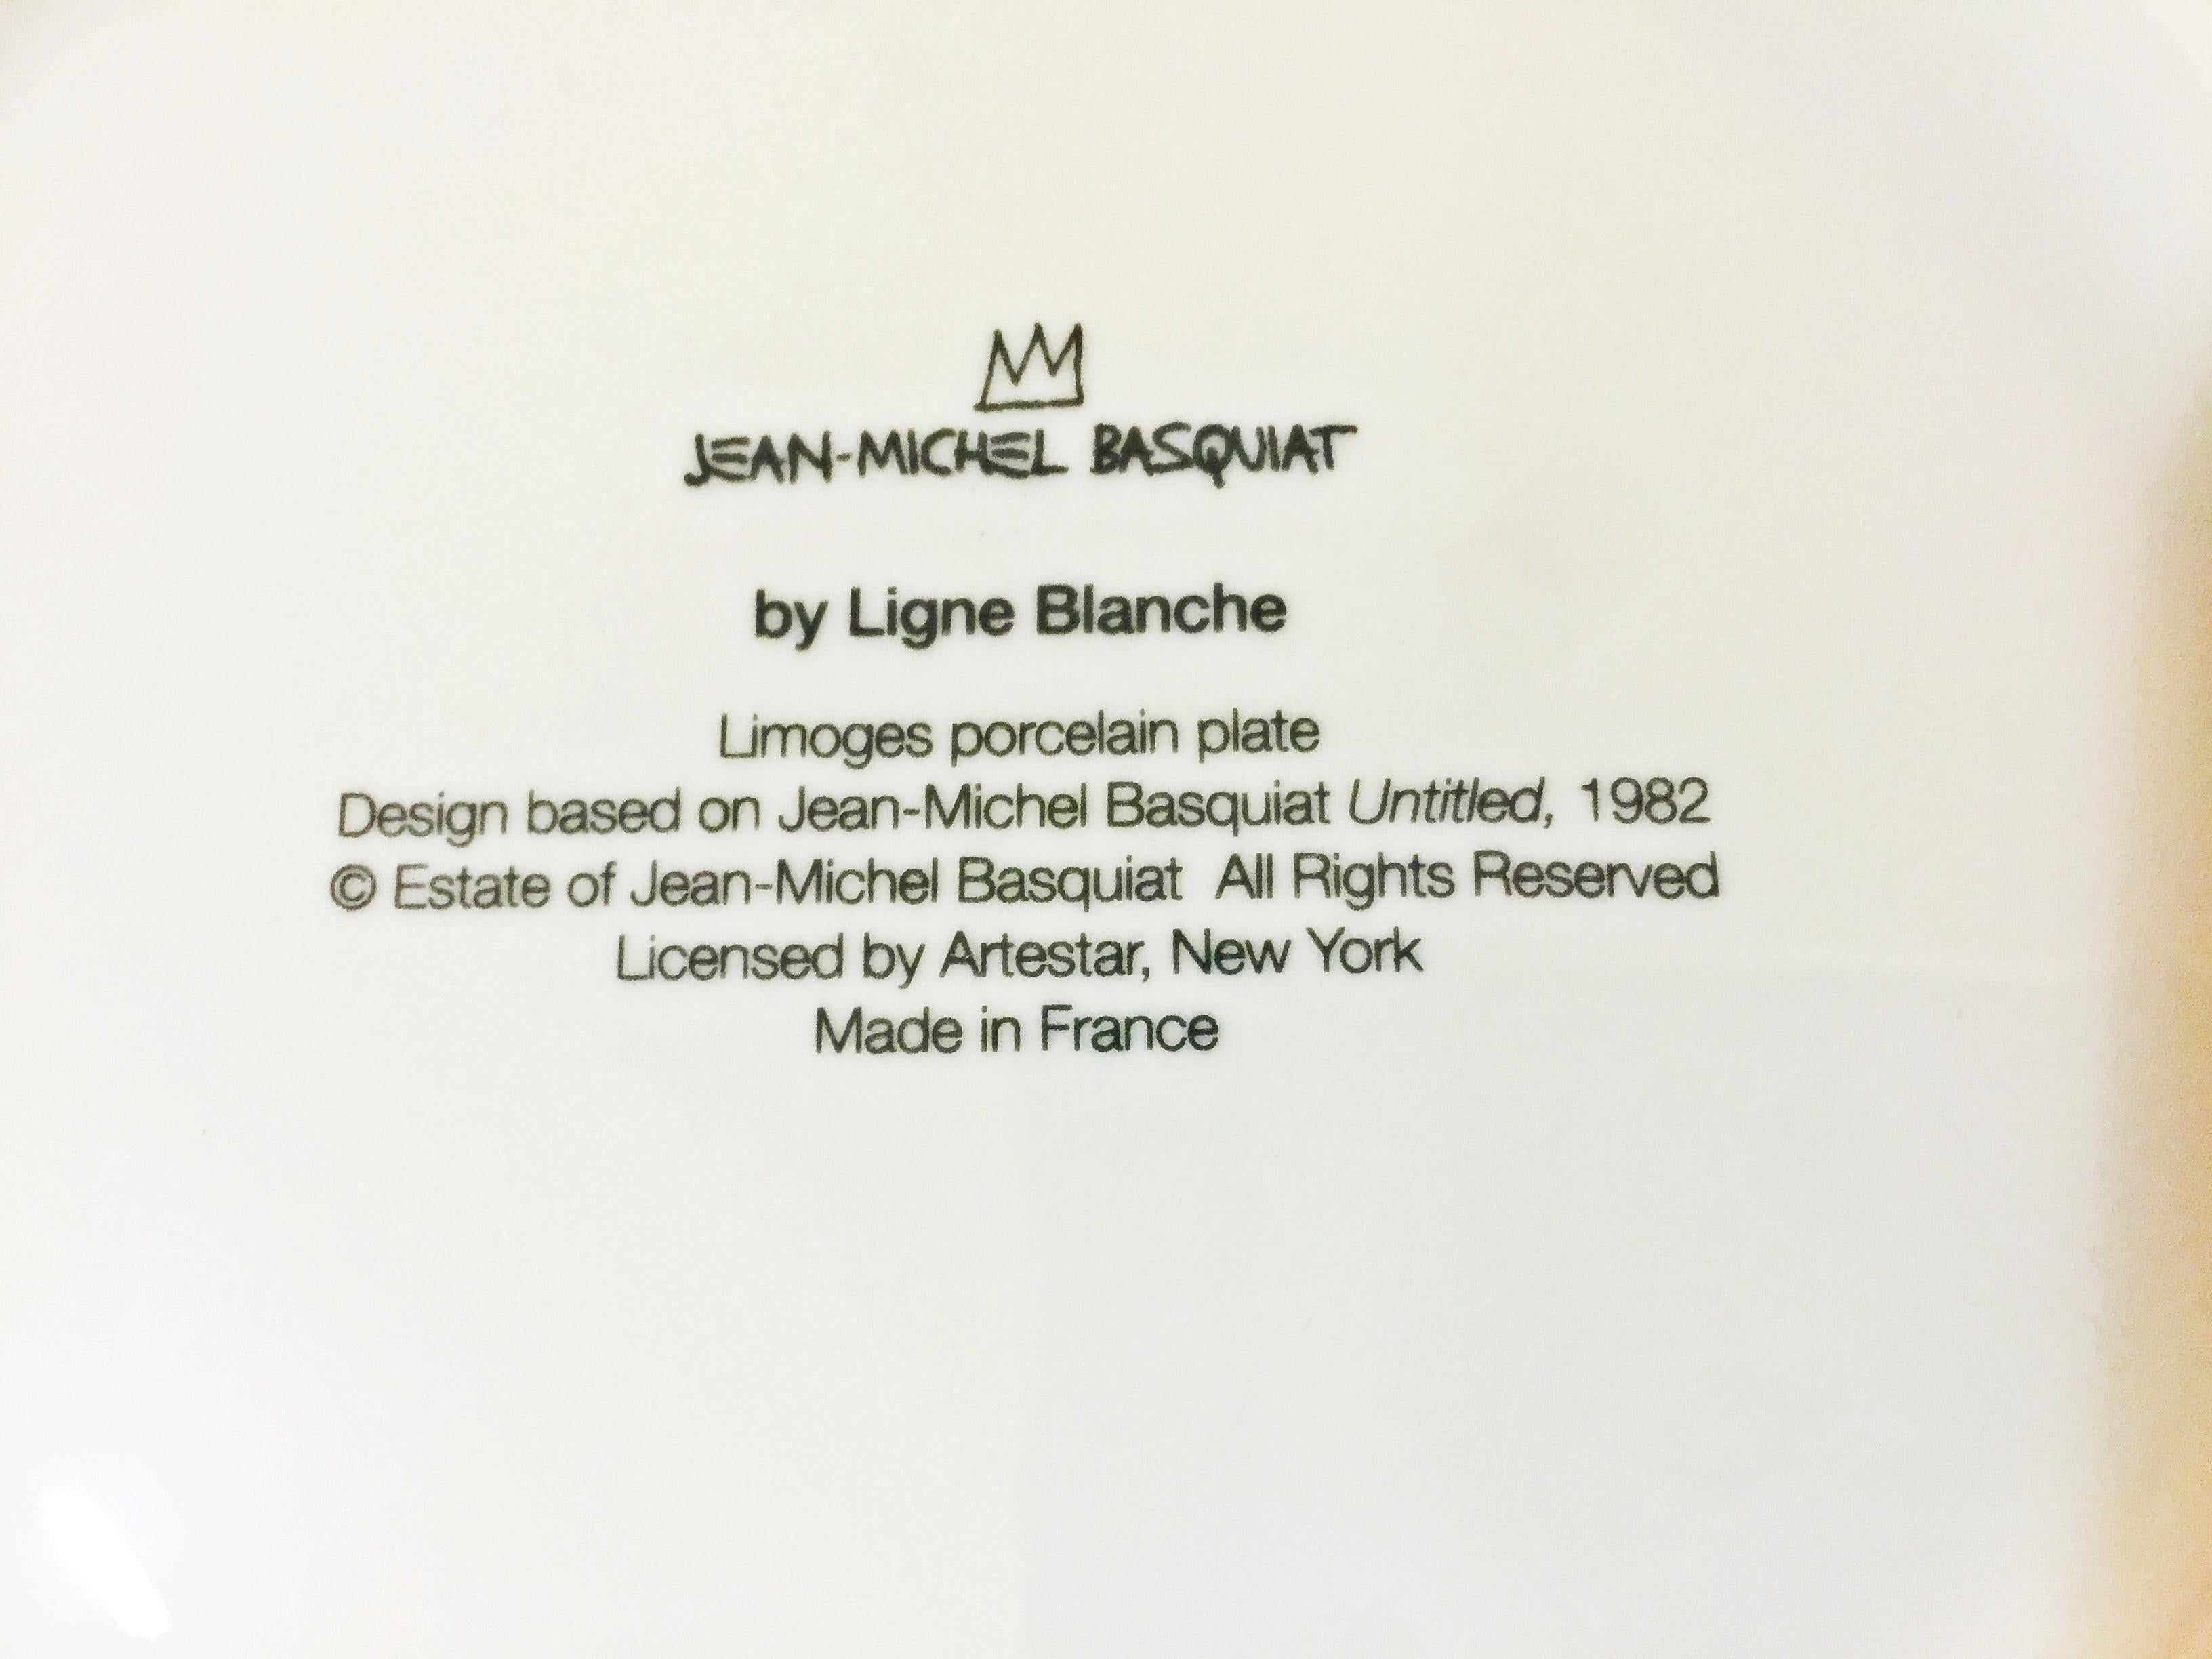 Estate Authorized Porcelain Plate in Presentation Gift Box - Pop Art Mixed Media Art by Jean-Michel Basquiat